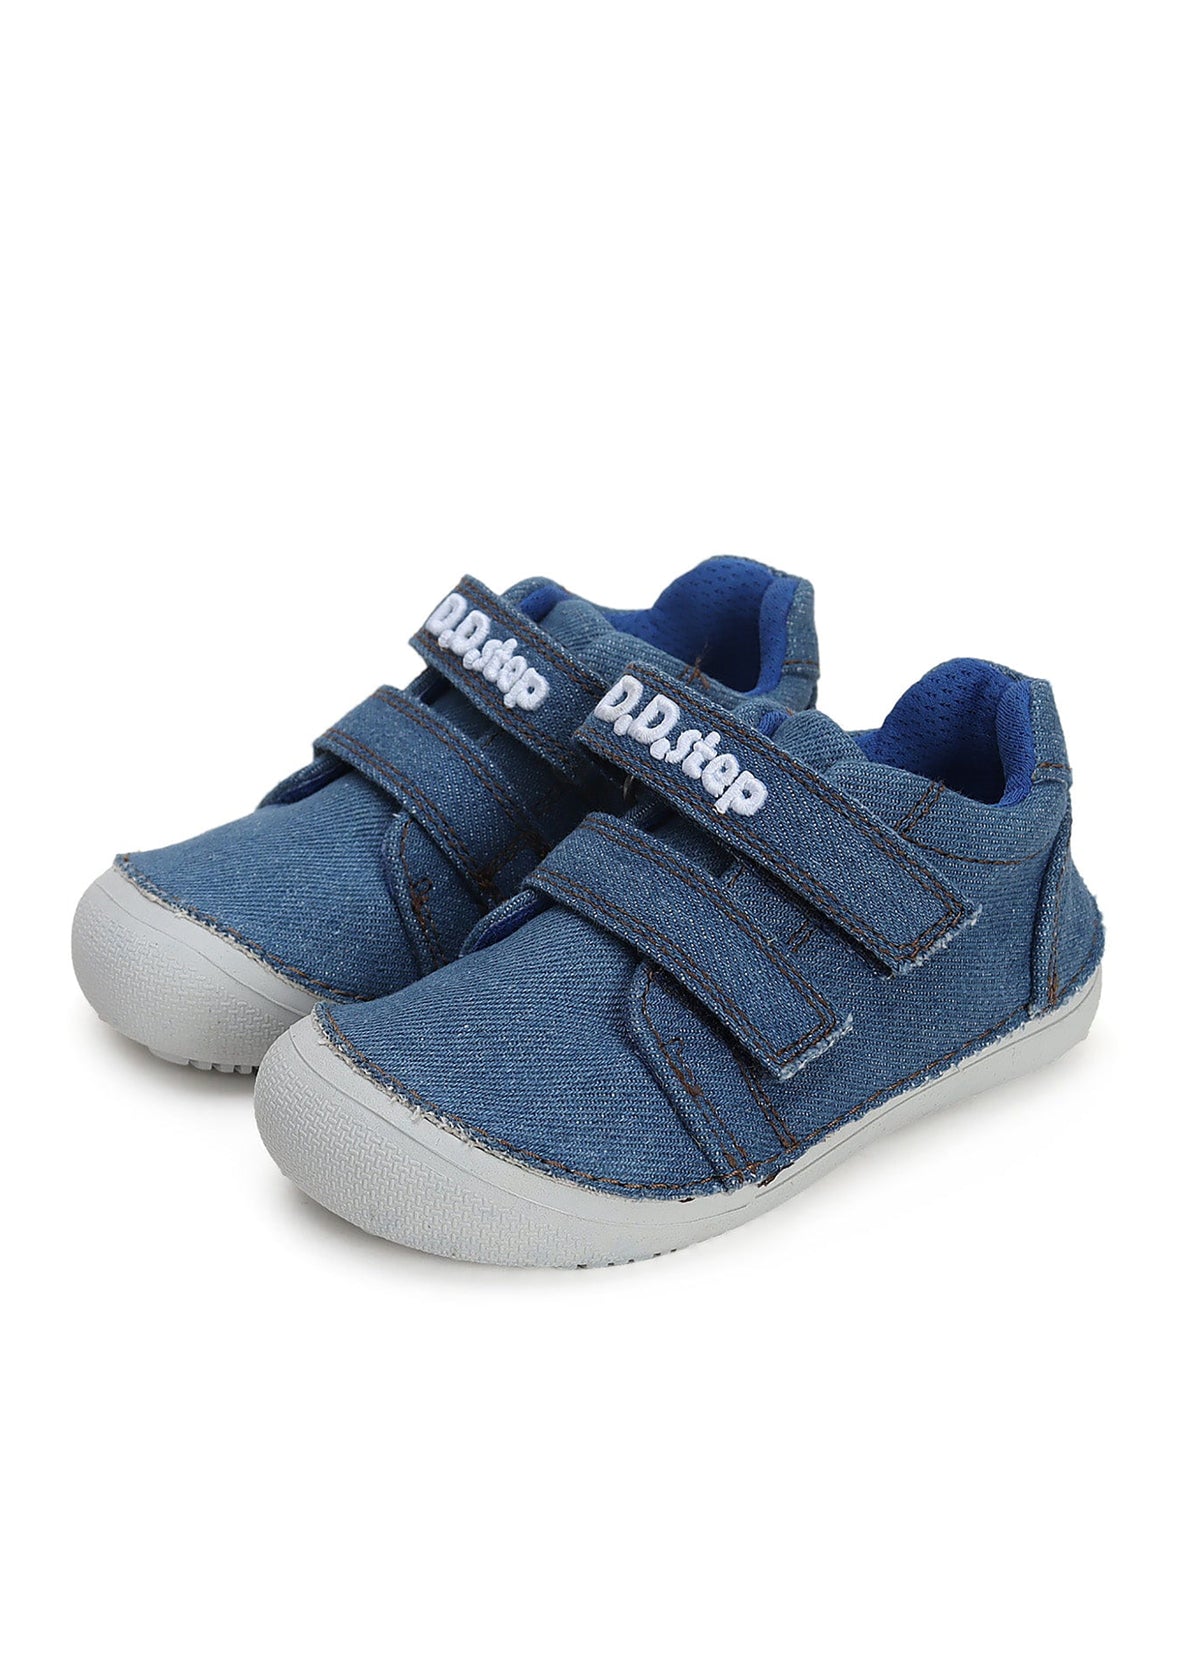 Children's barefoot sneakers - Denim Blue Canvas